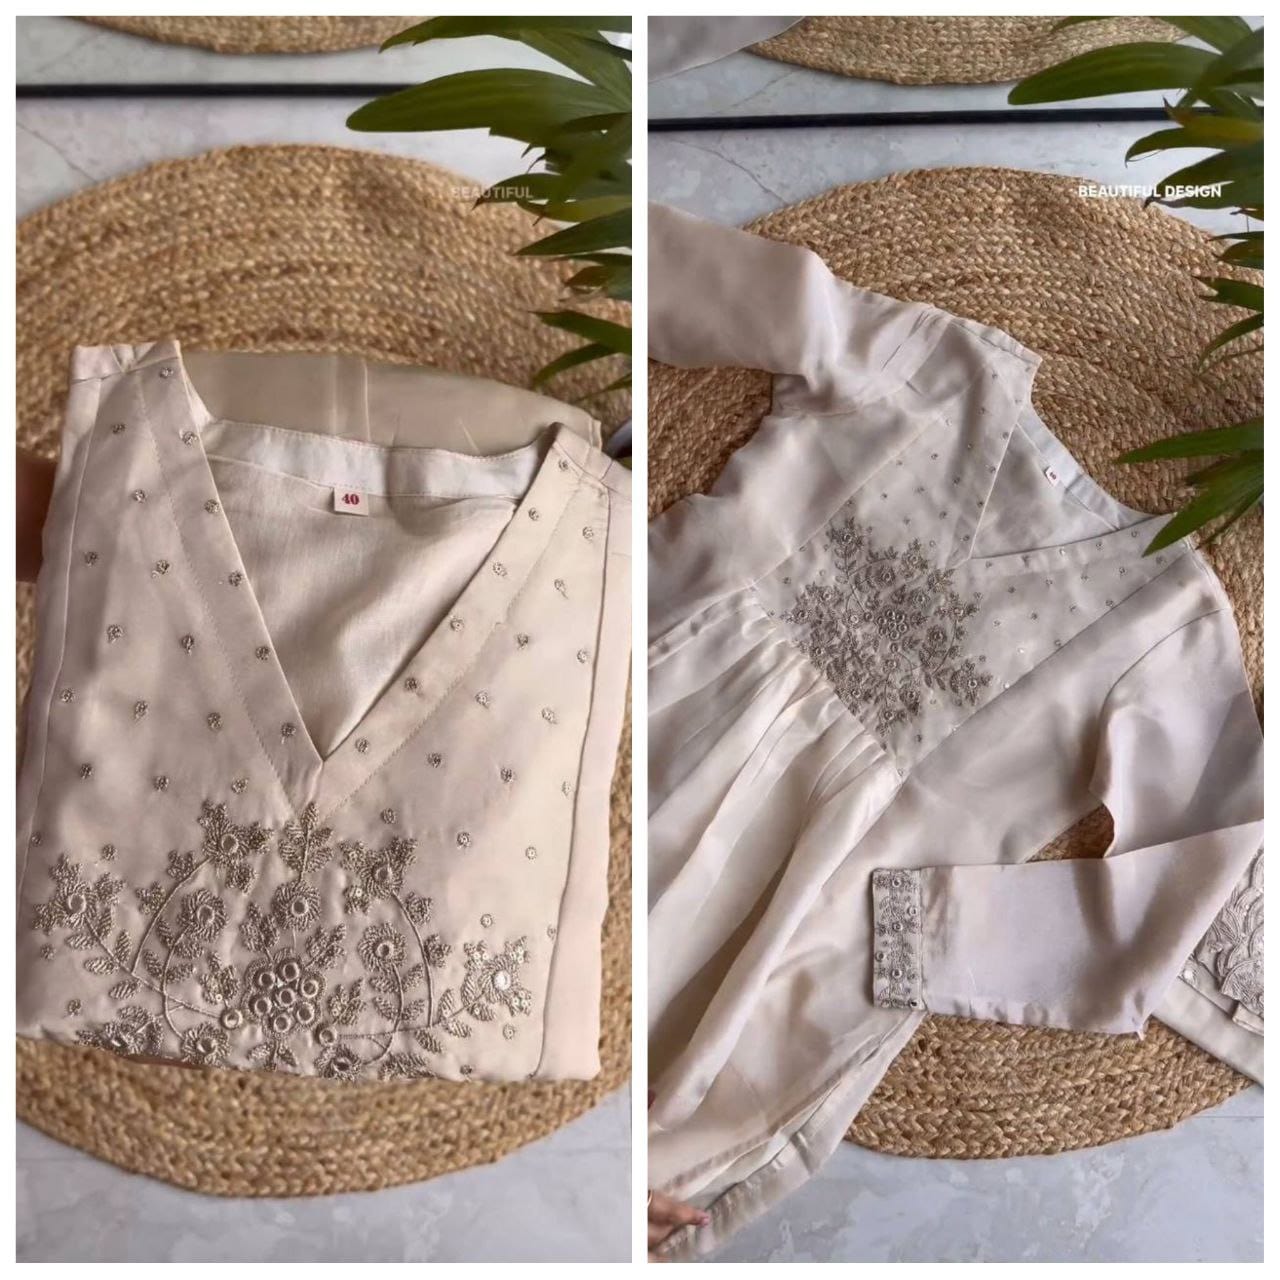 KD Designer outfits Exquisite Tissu Organza Silk Designer Suit Set with Thread and Sequence Work